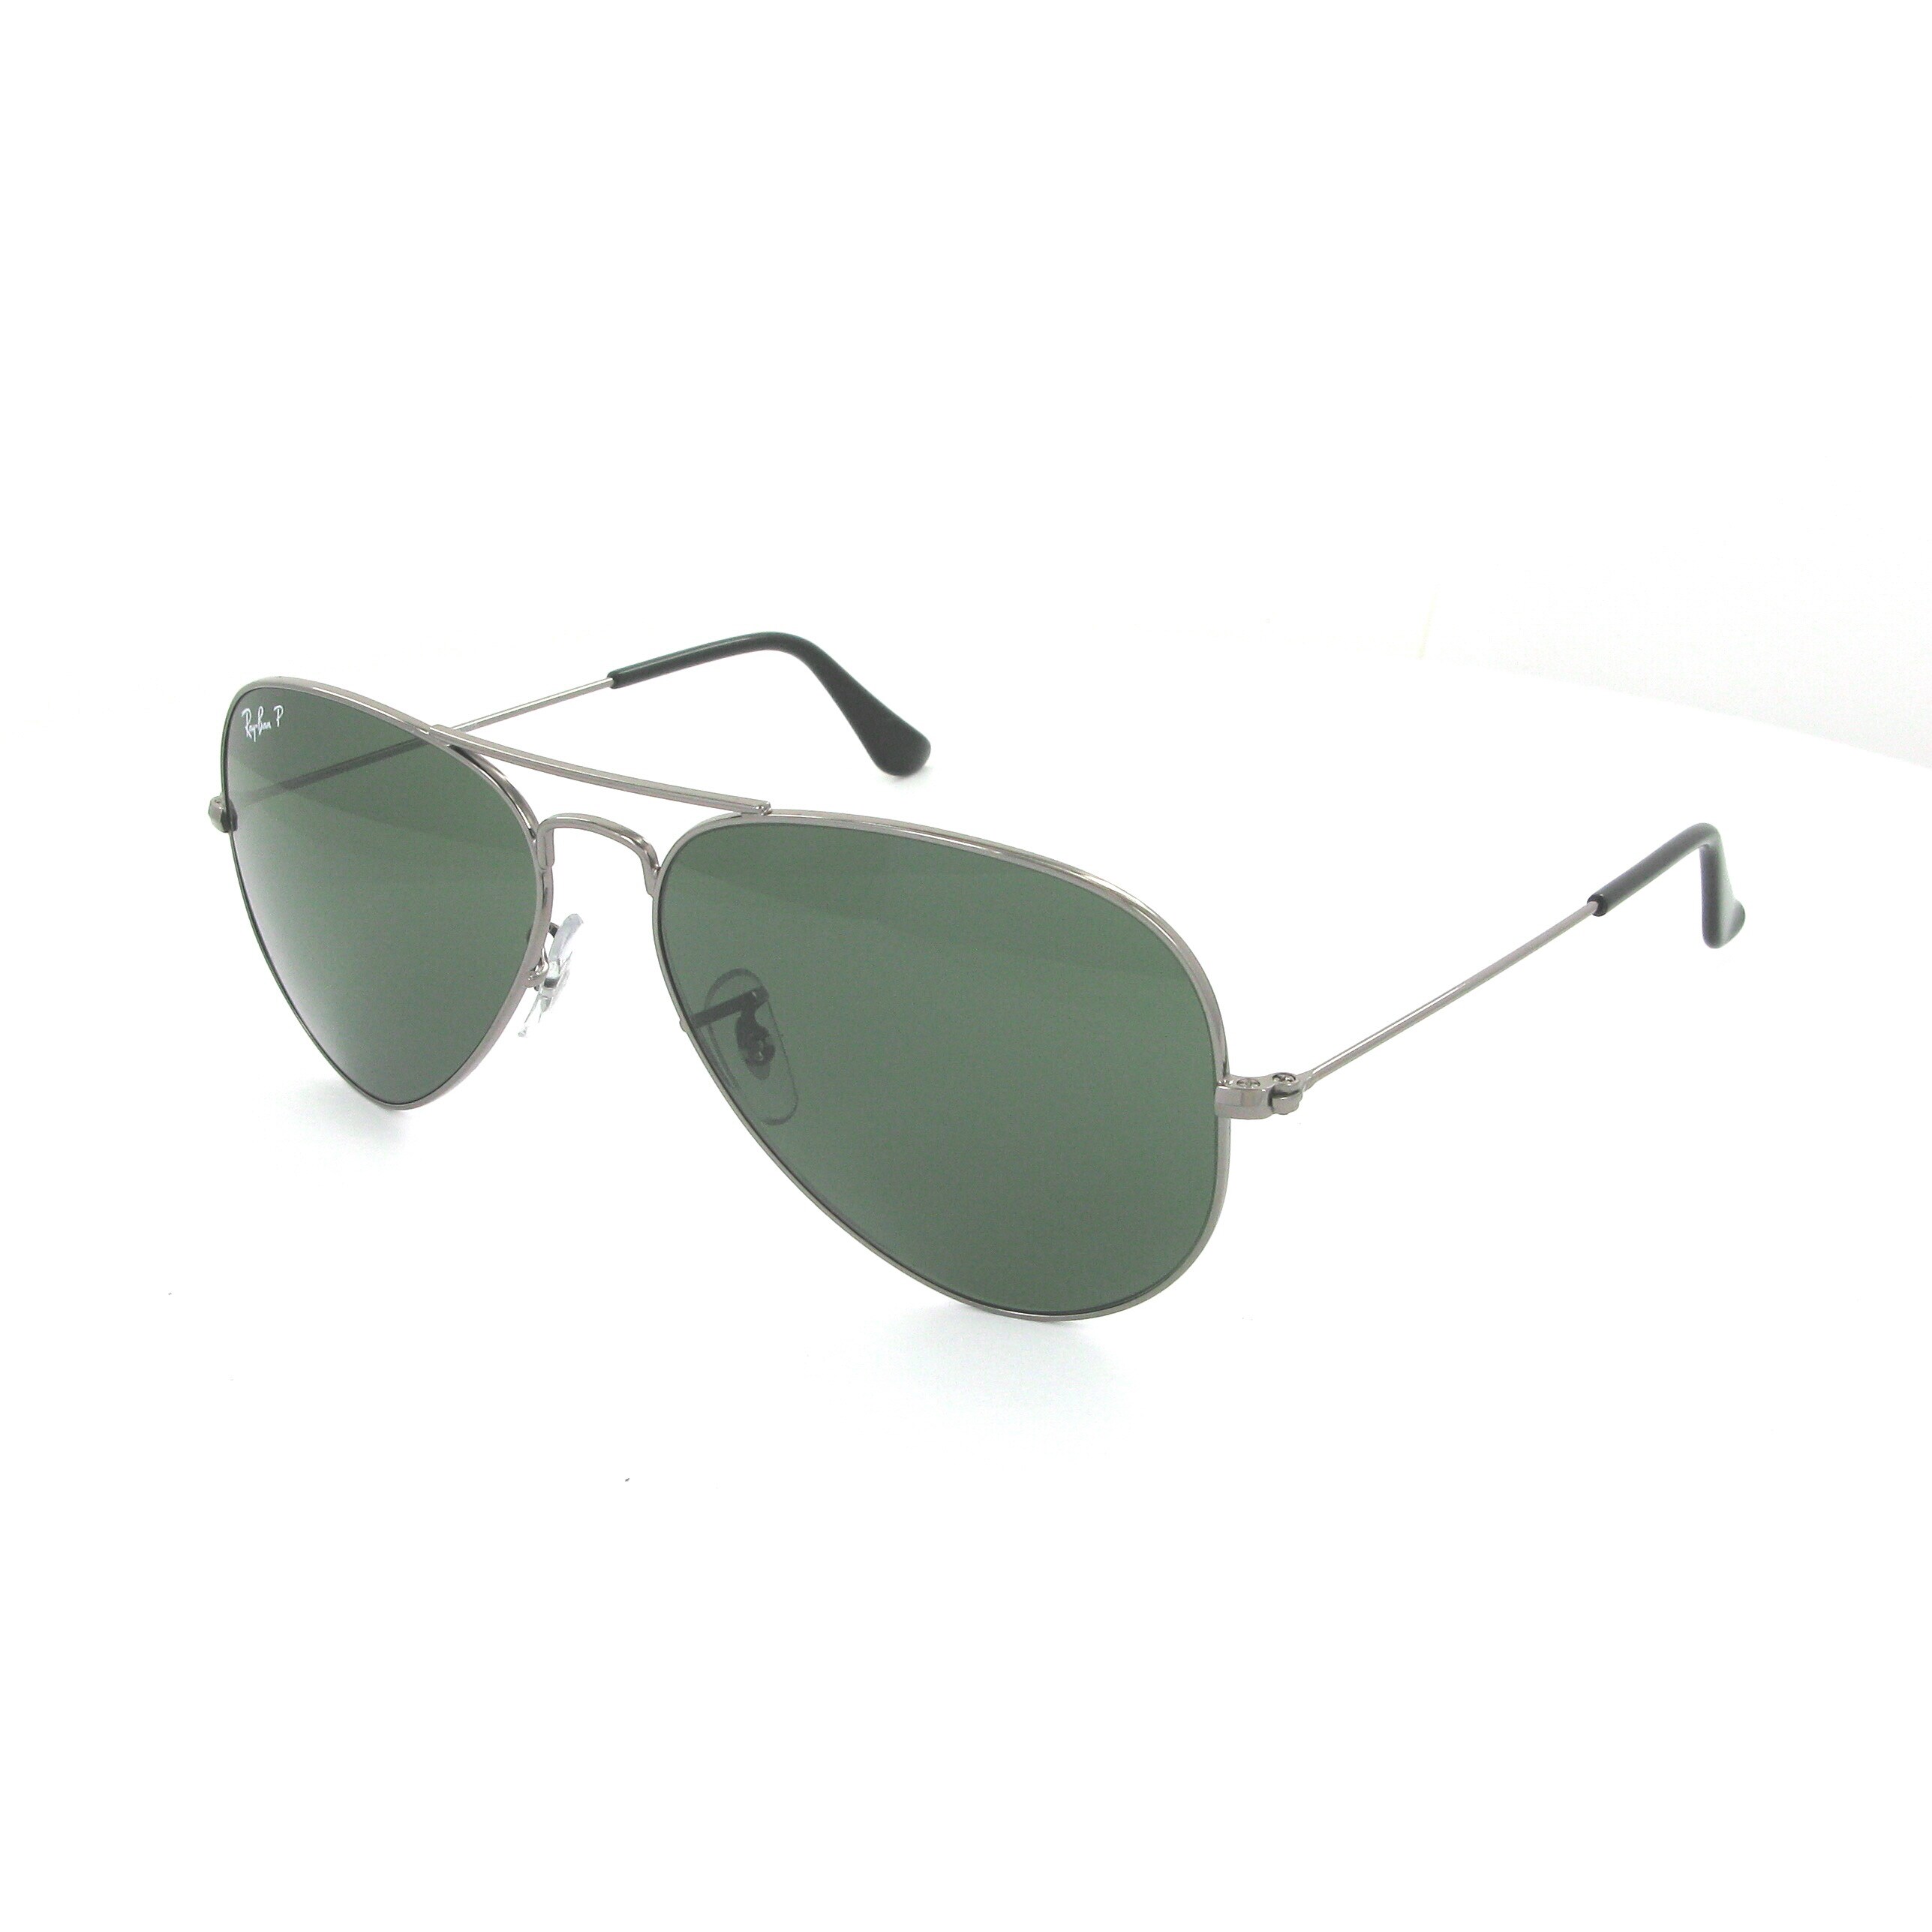 Ray Ban Aviator Rb3025 Gunmetal Frame Green Classic Polarized Lens Sunglasses Overstock